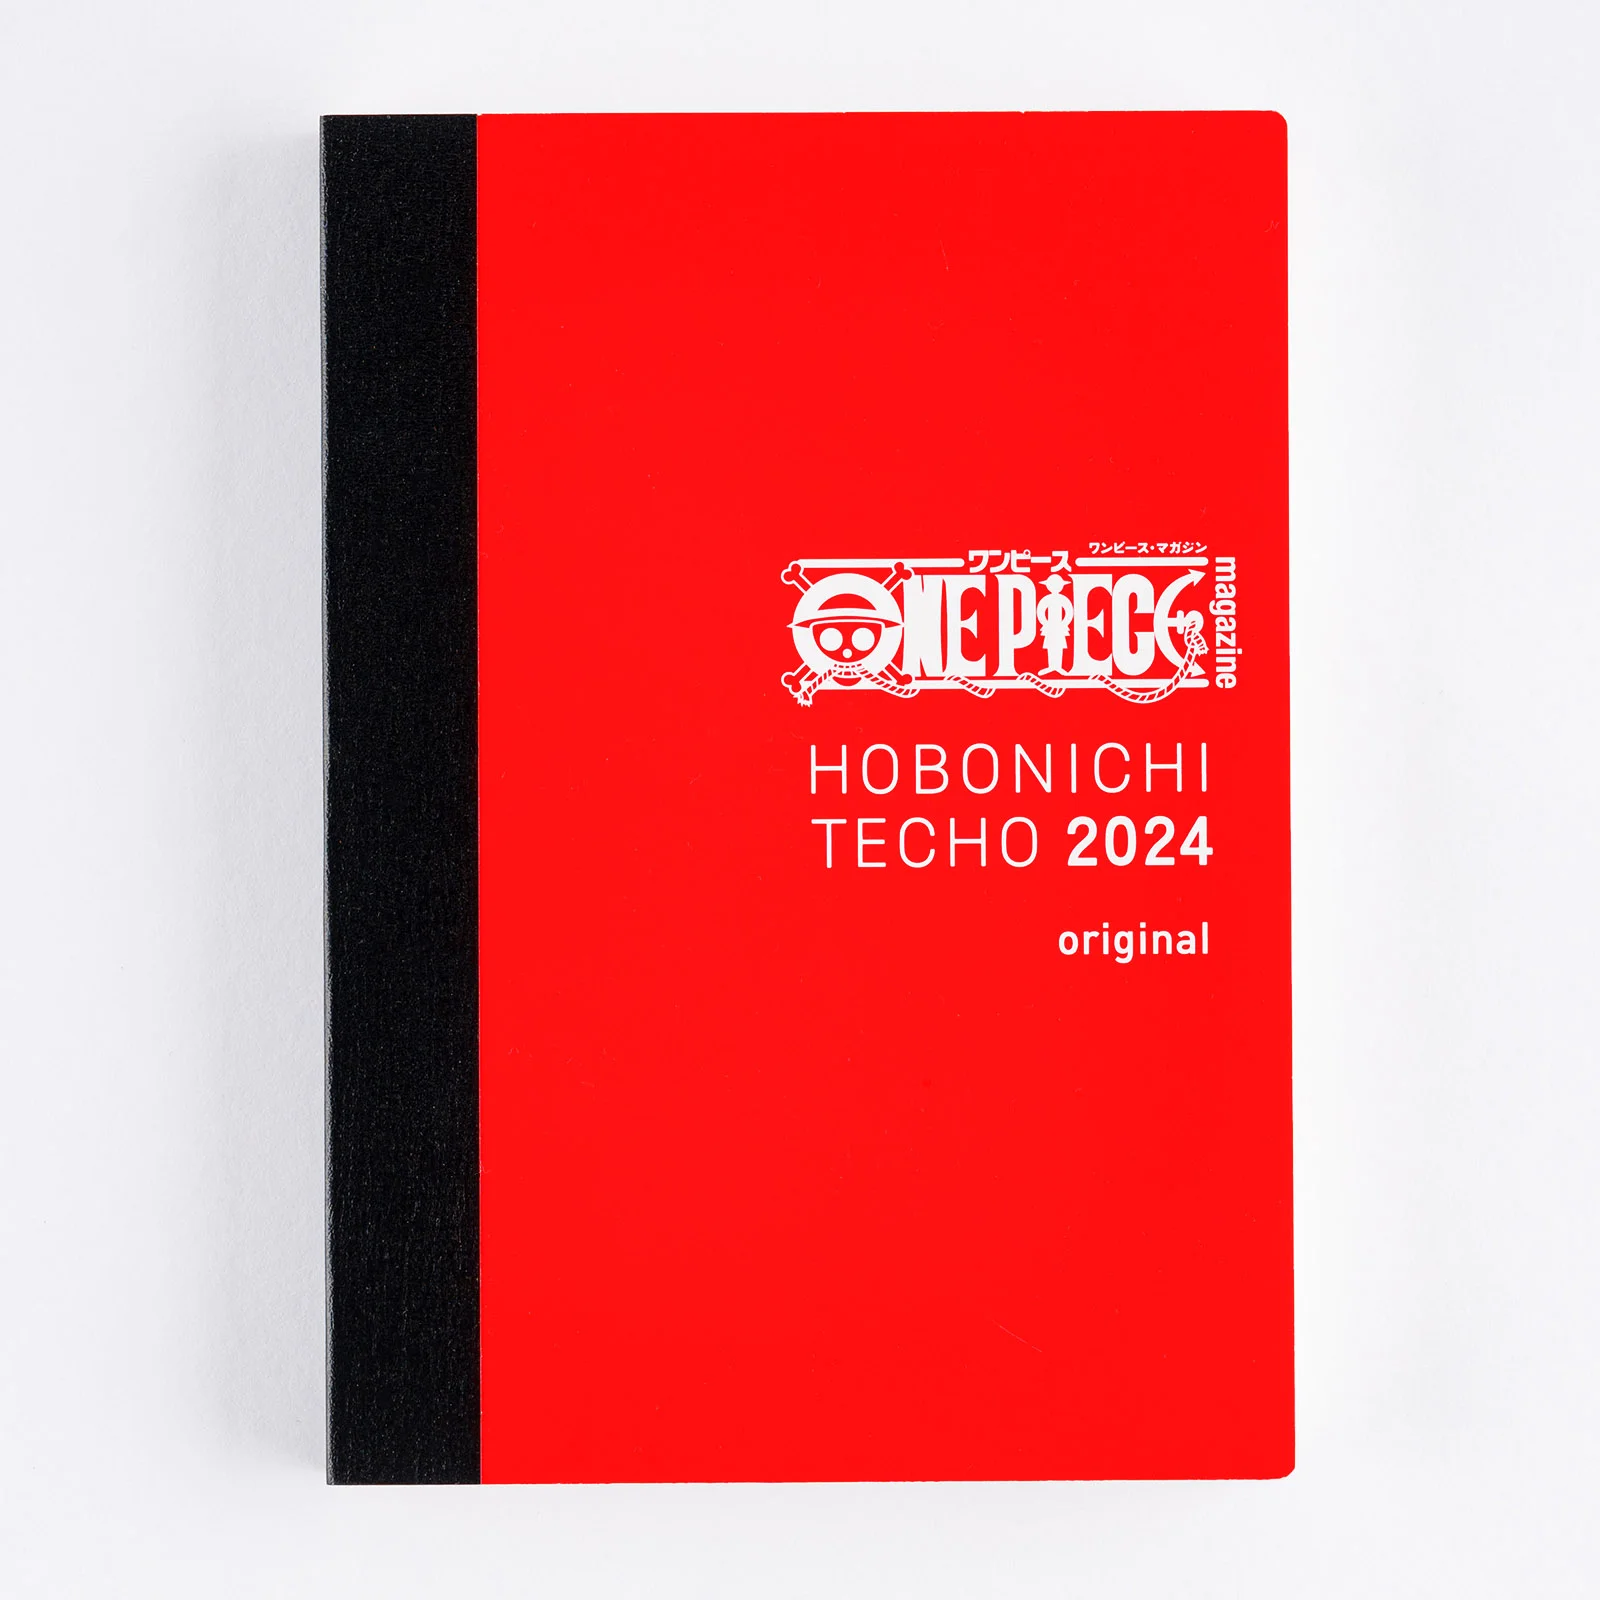 Hobonichi Techo Accessories ONE PIECE magazine: Hobonichi Stencil